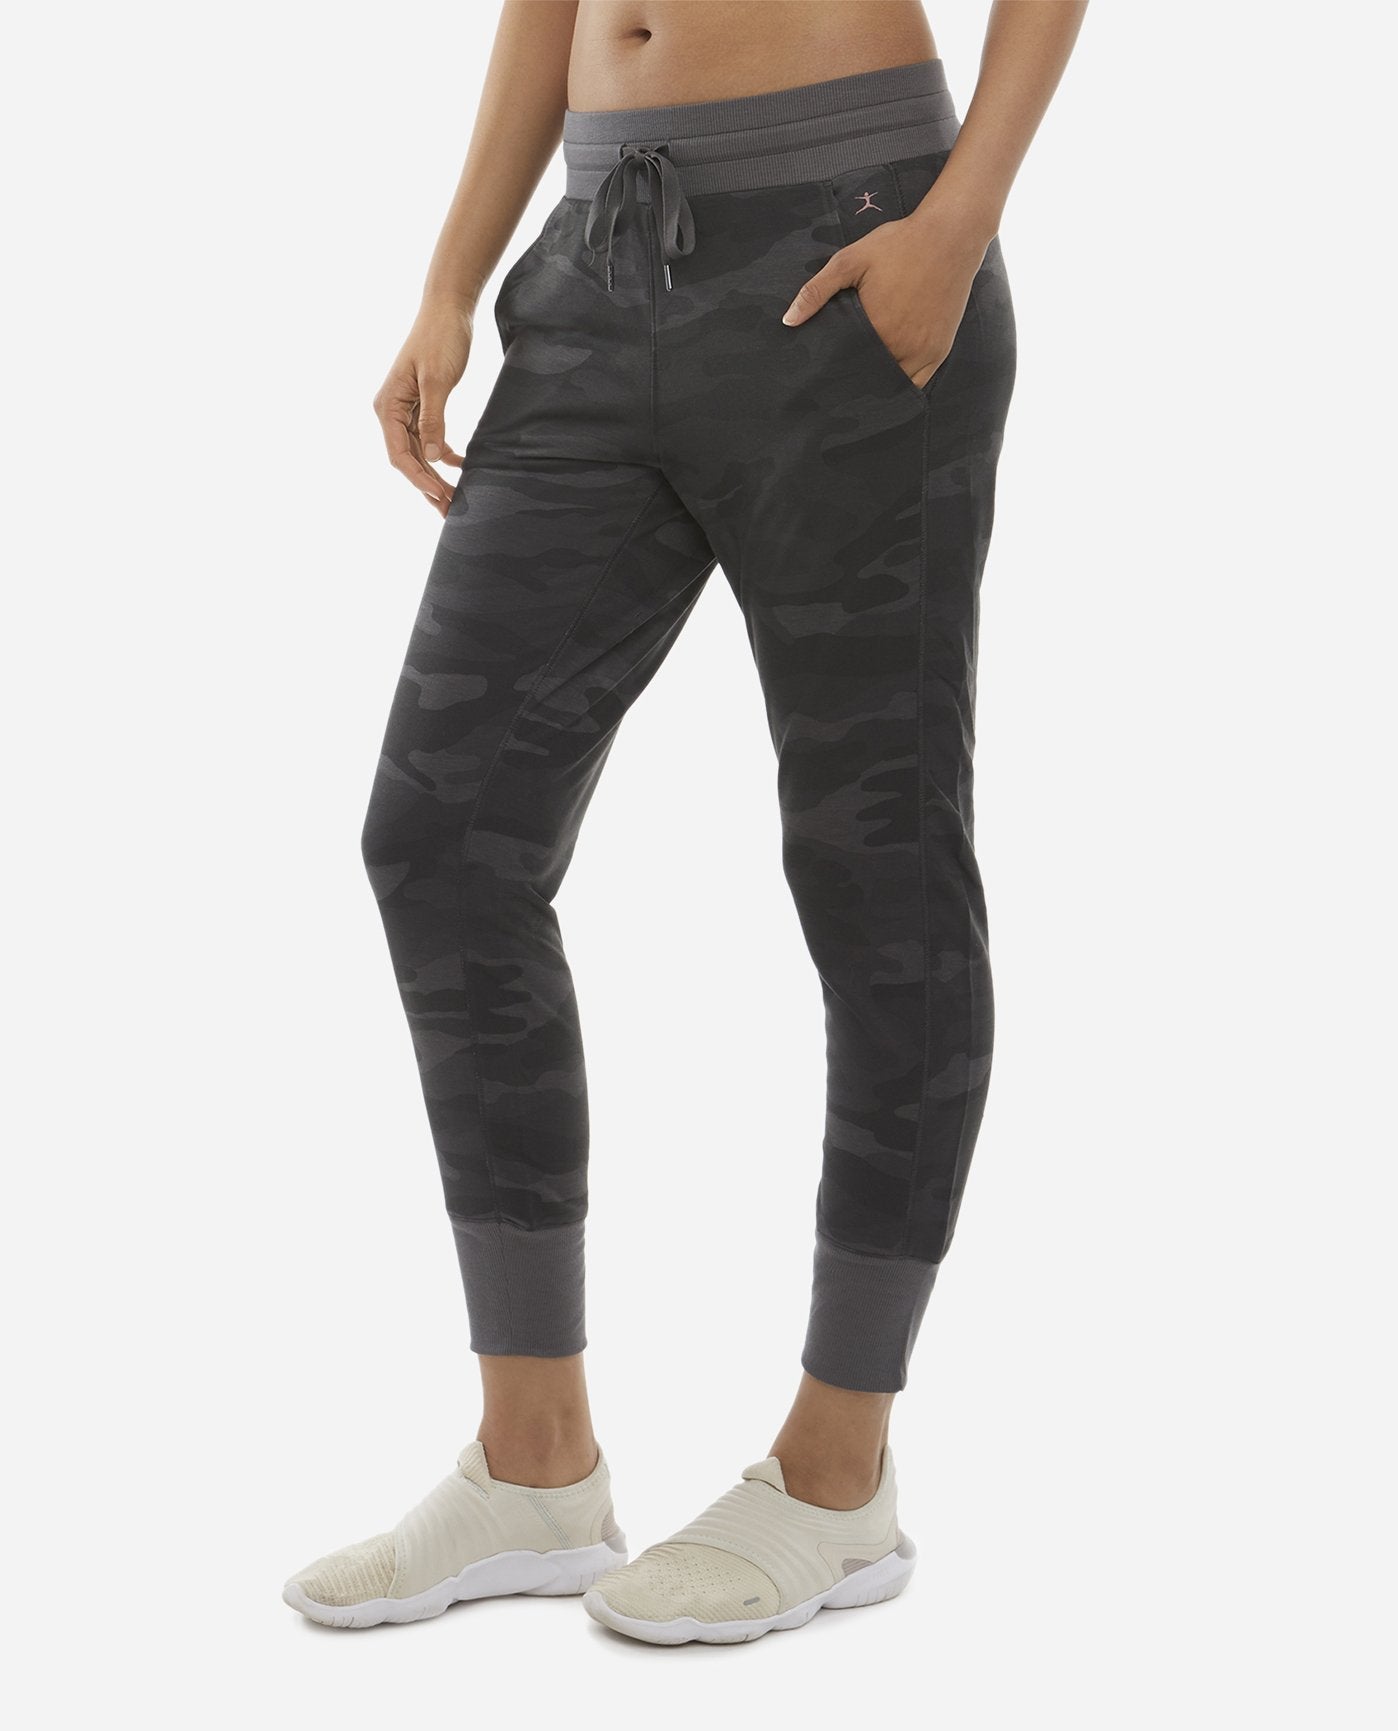 Danskin Ladies' Super Soft 7/8 Legging (Black Camo Print, X-Large) 